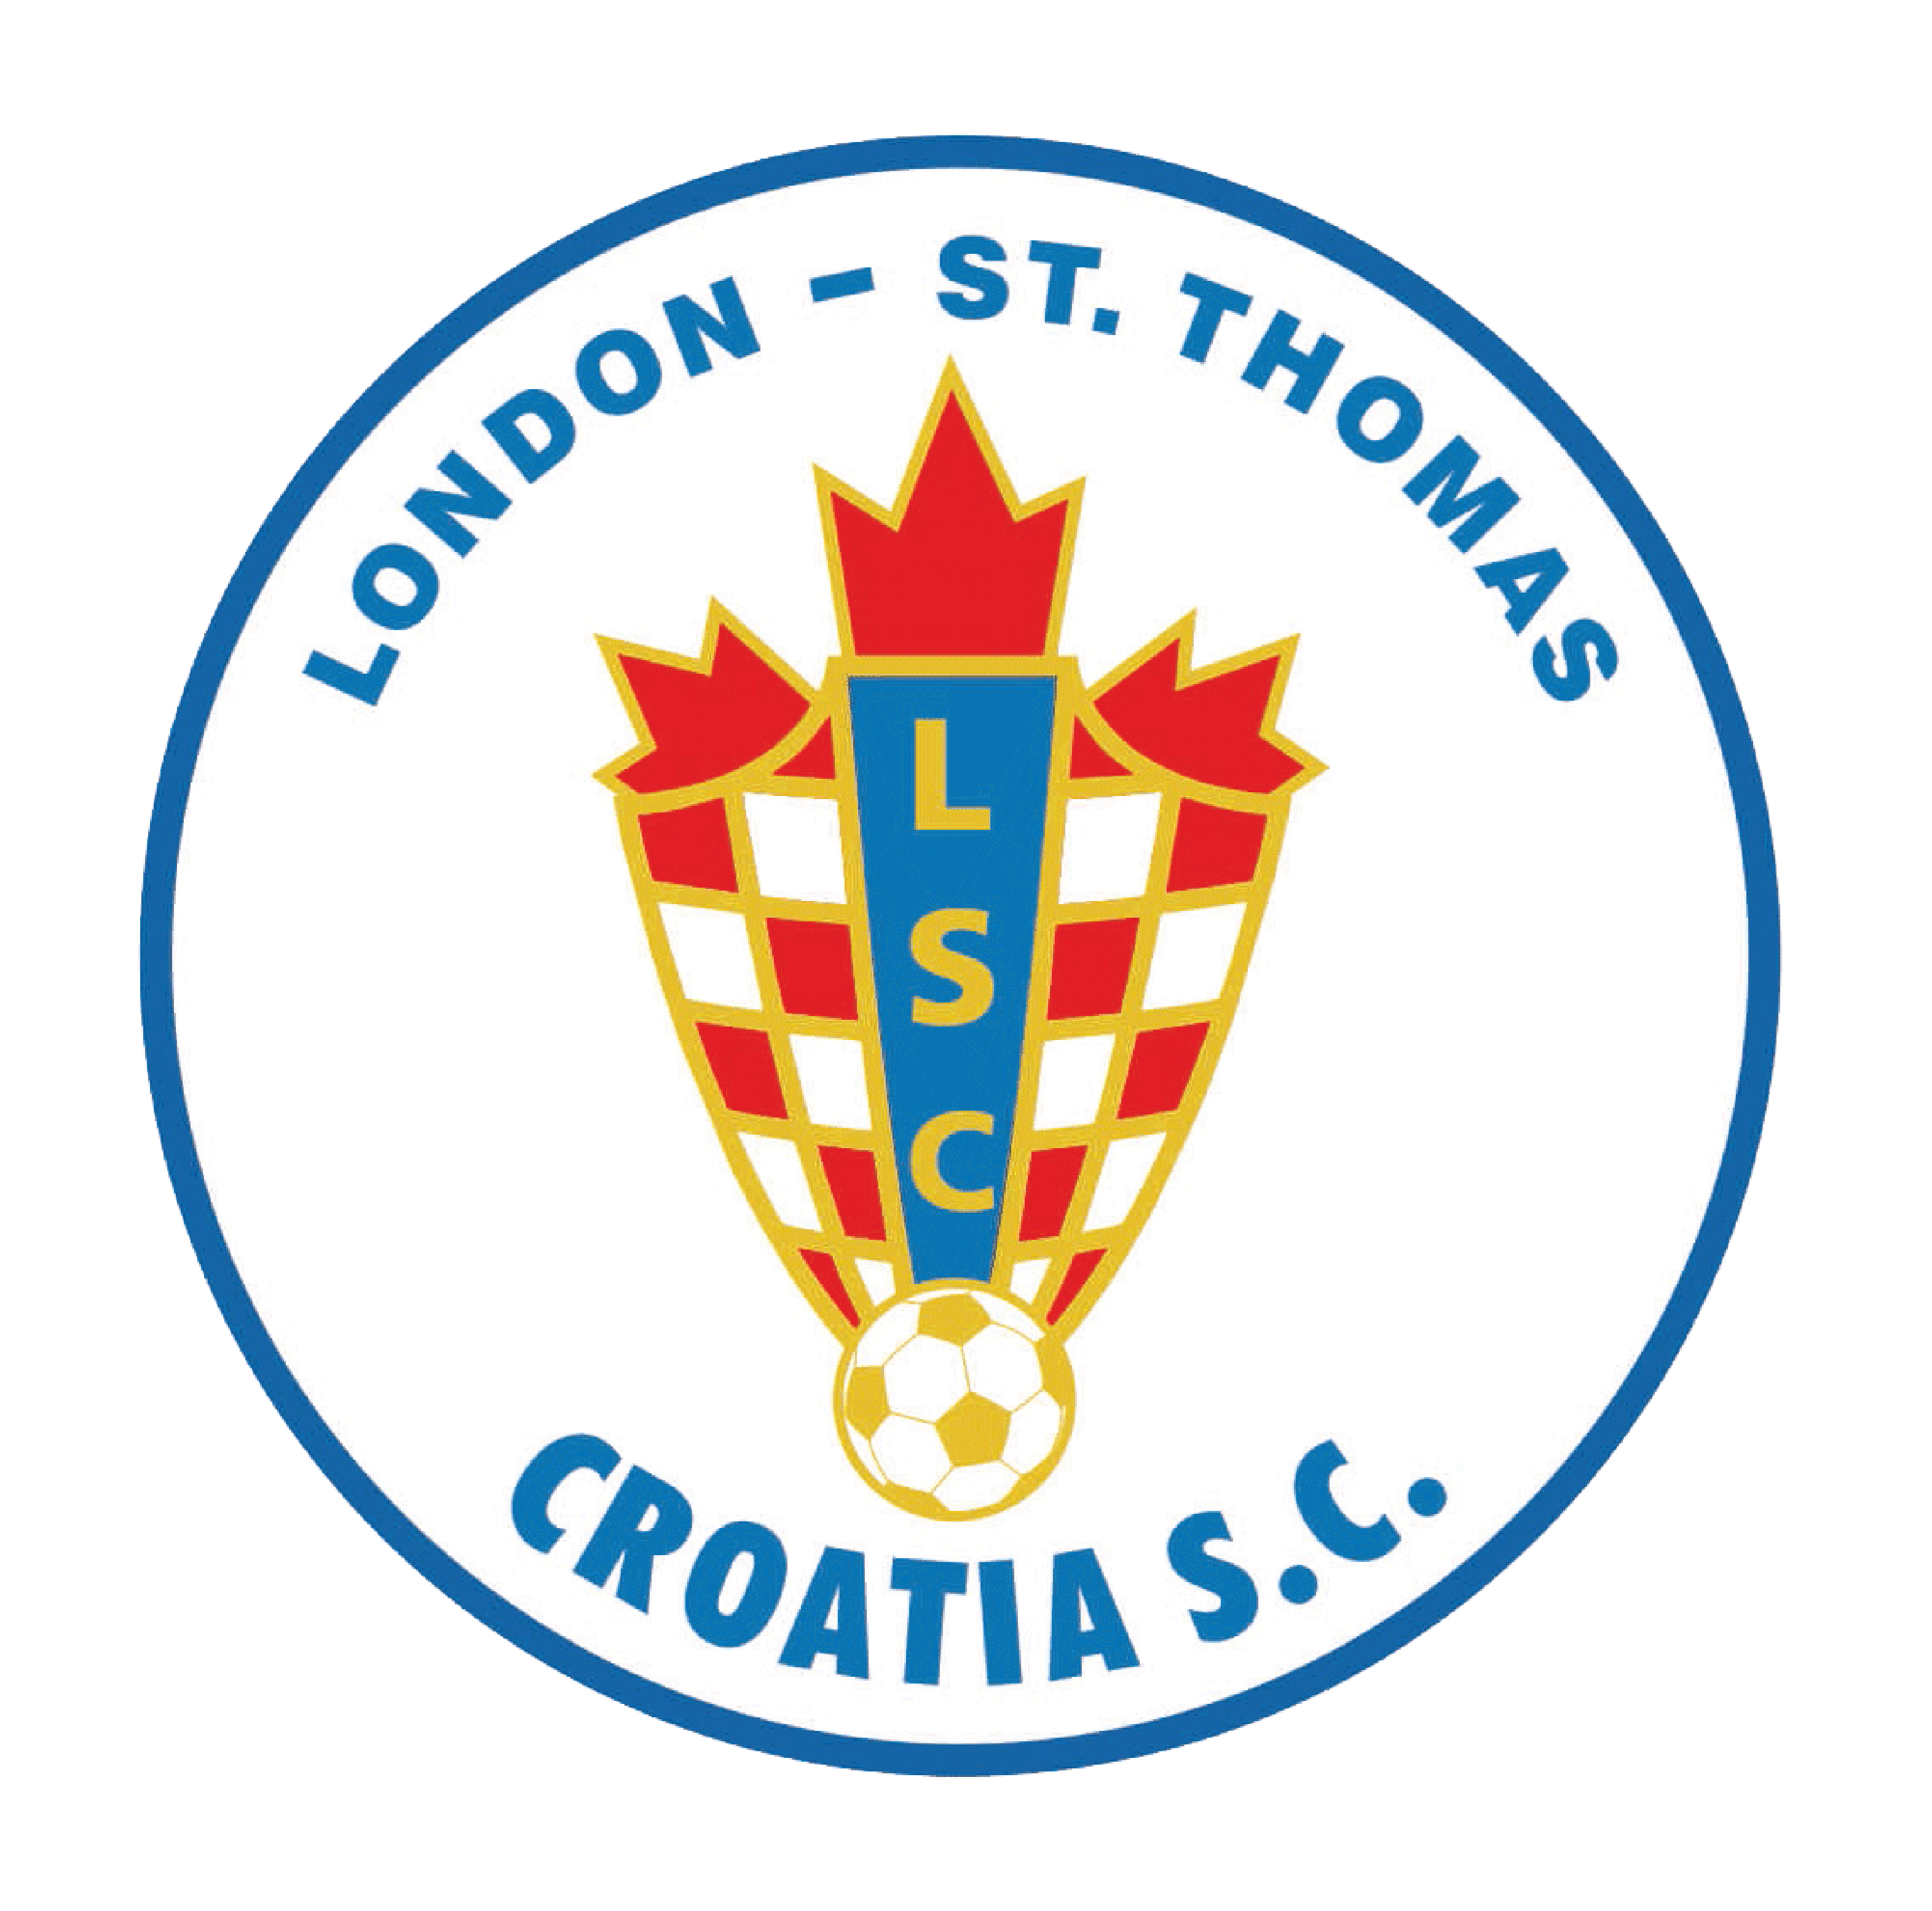 London & St. Thomas Croatia Soccer Club